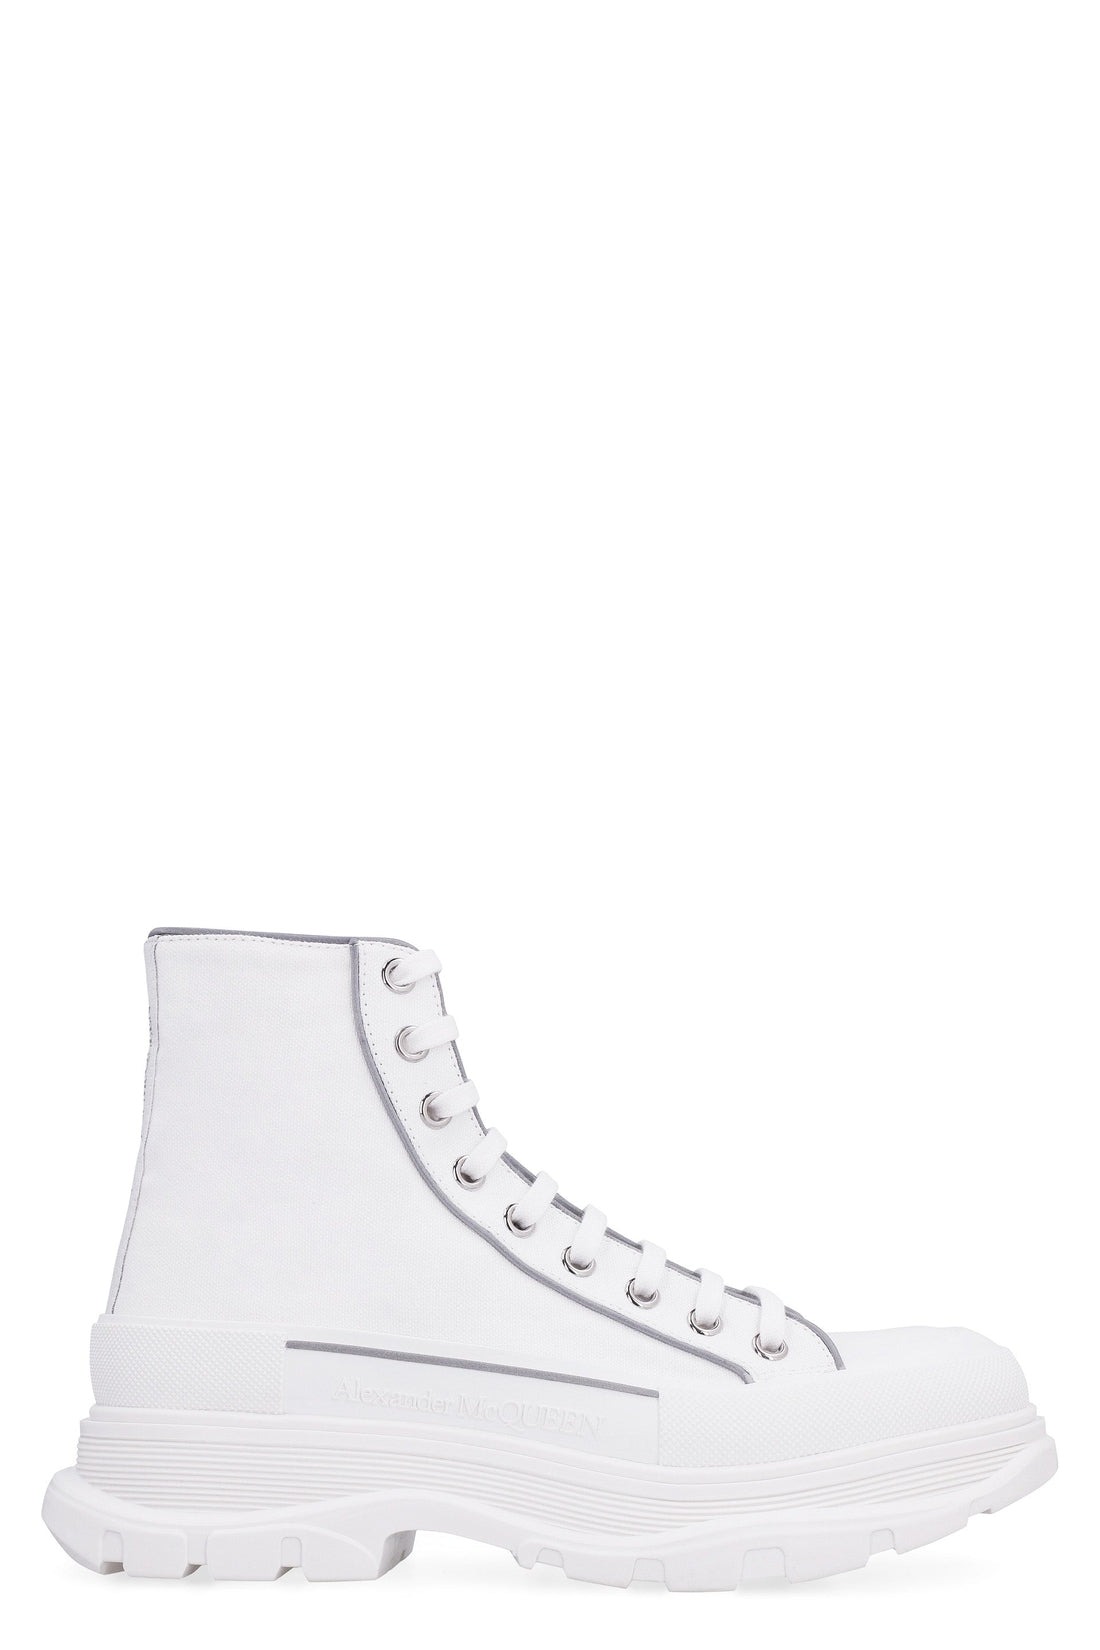 Alexander McQueen-OUTLET-SALE-Tread Slick lace-up ankle boots-ARCHIVIST